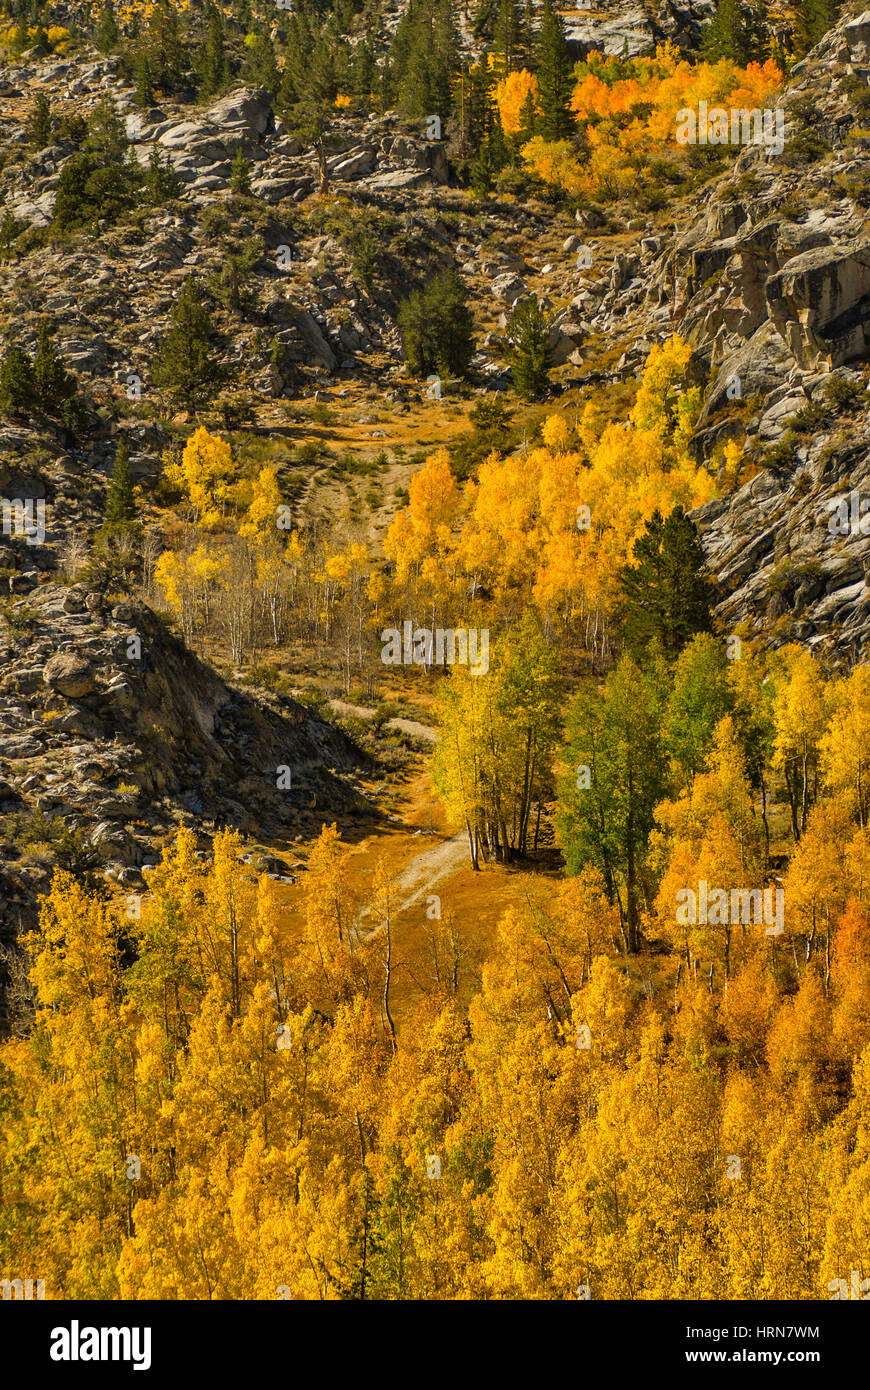 Aspen trees in fall foliage in Evolution Region, John Muir Wilderness, Sierra Nevada, California, USA Stock Photo